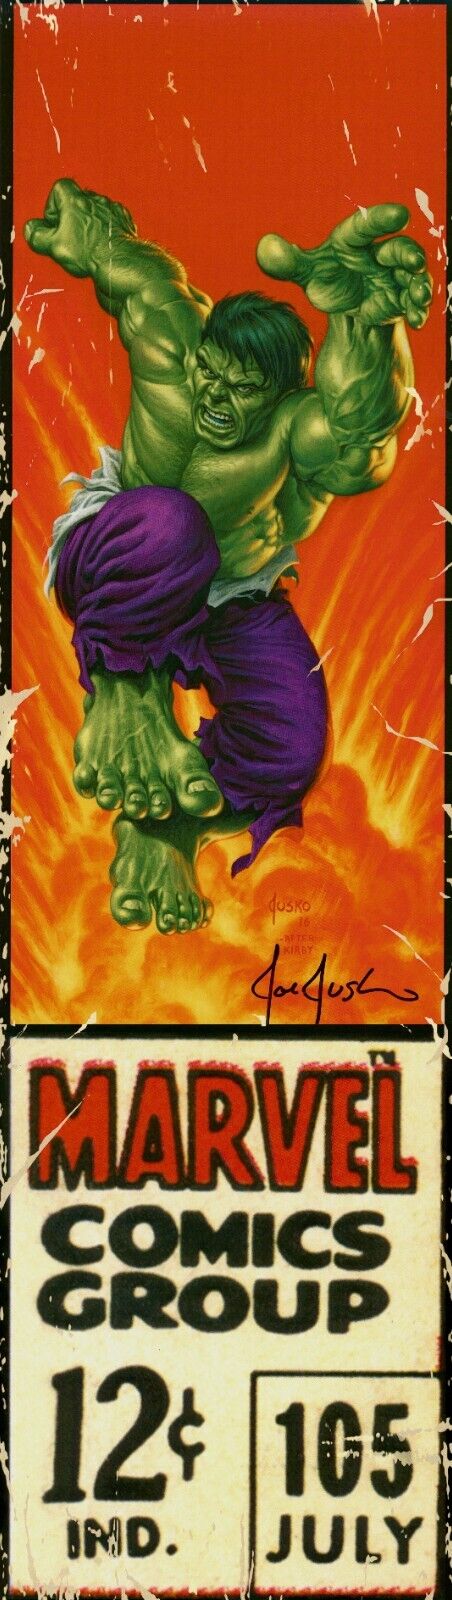 Joe Jusko Signed Marvel Comics Corner Box Art Print ~ Incredible Hulk / Avengers